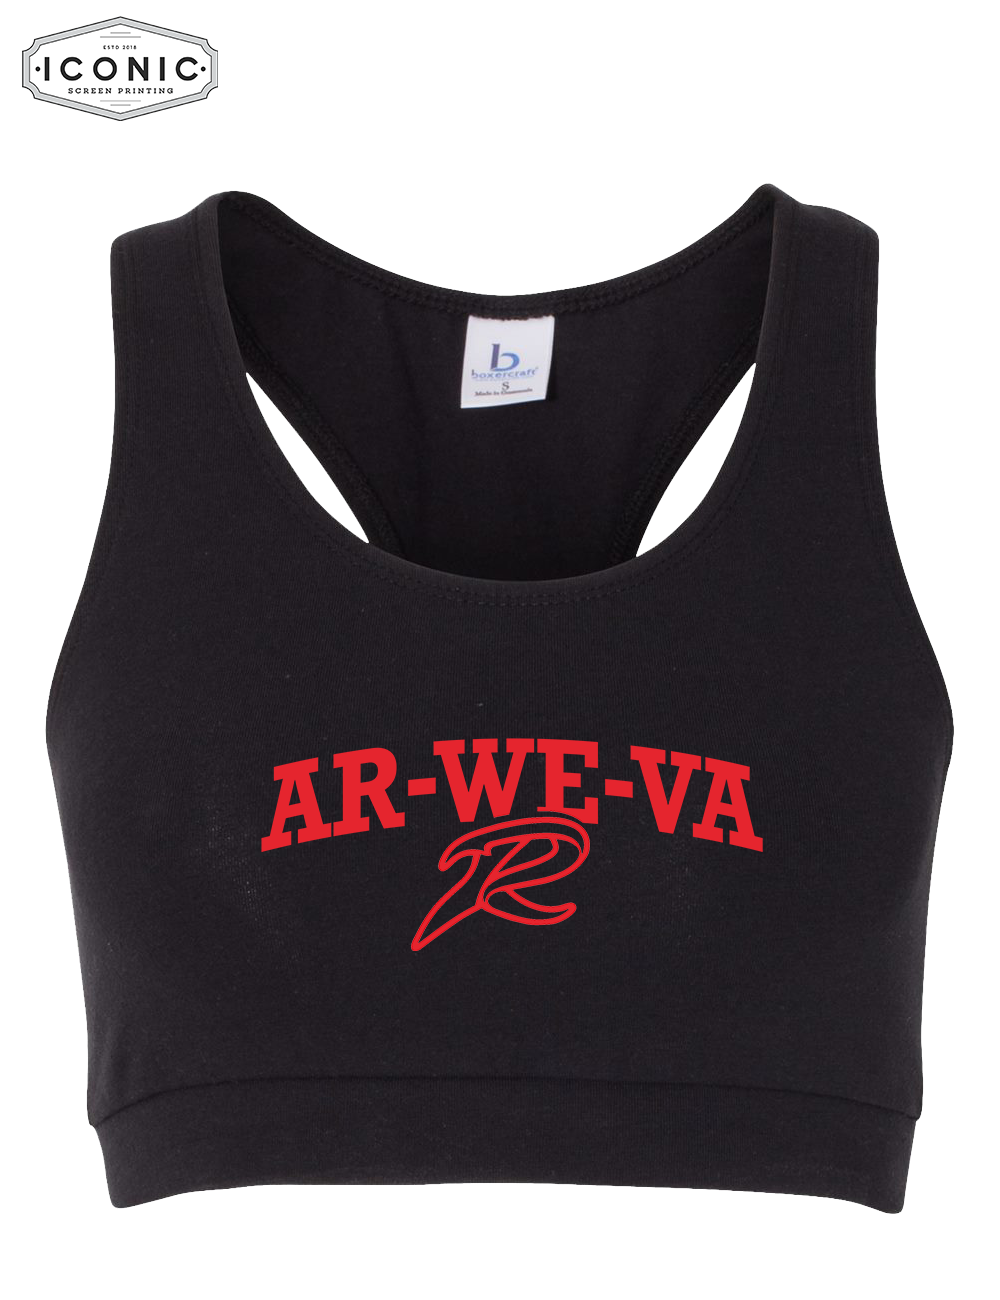 Ar-We-Va Rockets - Boxercraft Woman's & Girl's Sports Bra